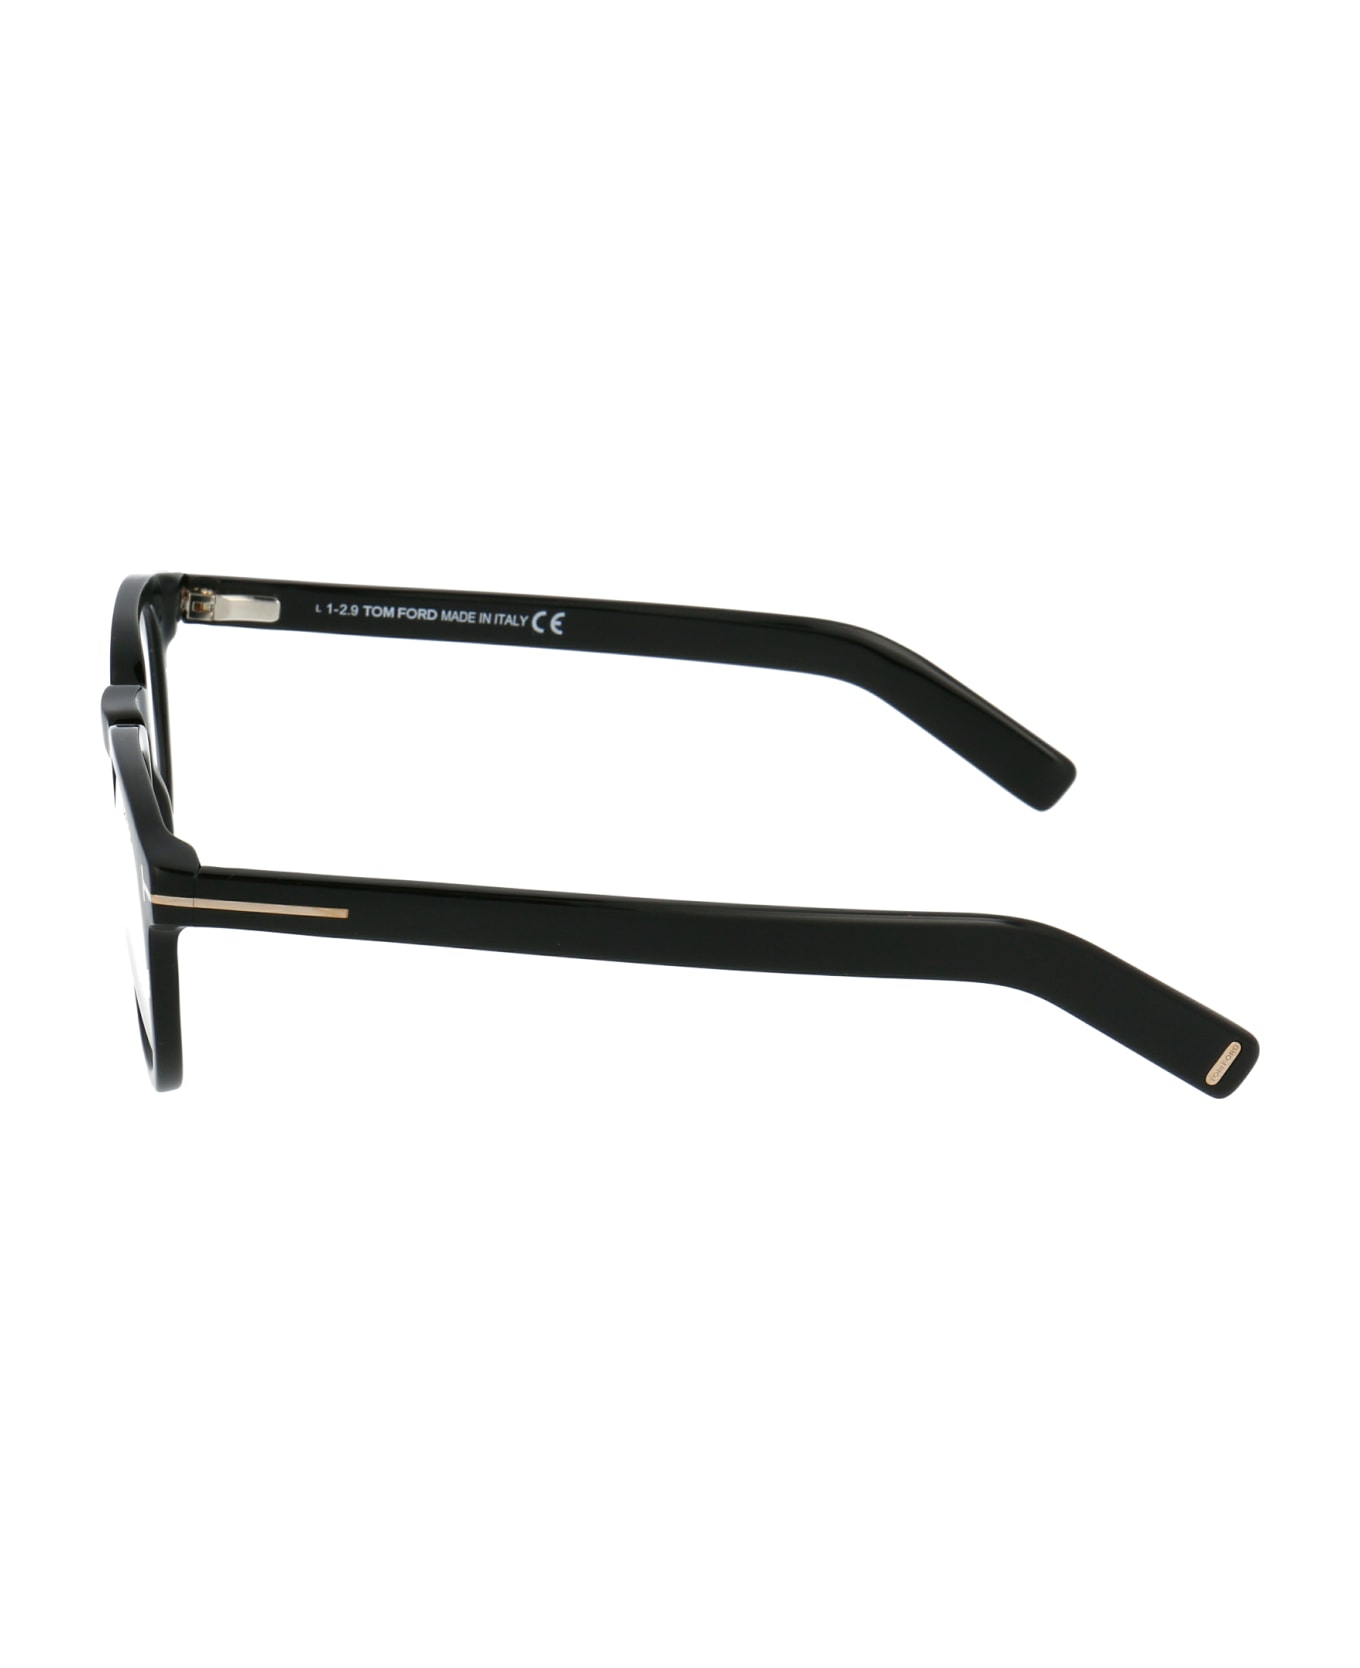 Tom Ford Eyewear Ft5629-b Glasses - 001 Nero Lucido アイウェア